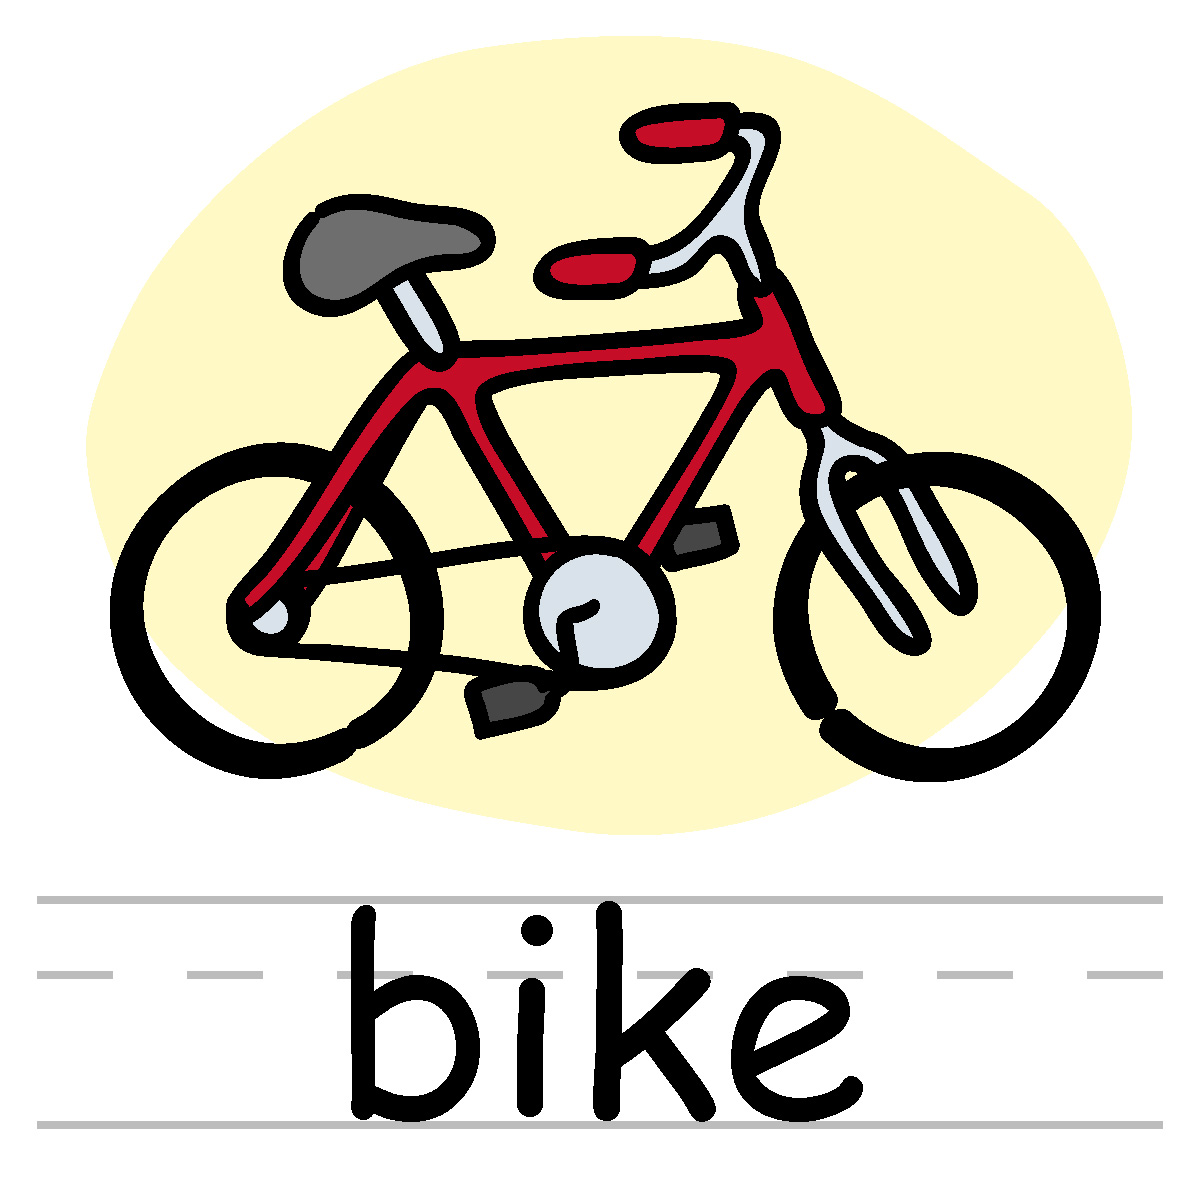 Bicycle bike clipart image cartoon bike icon bike wallpapers